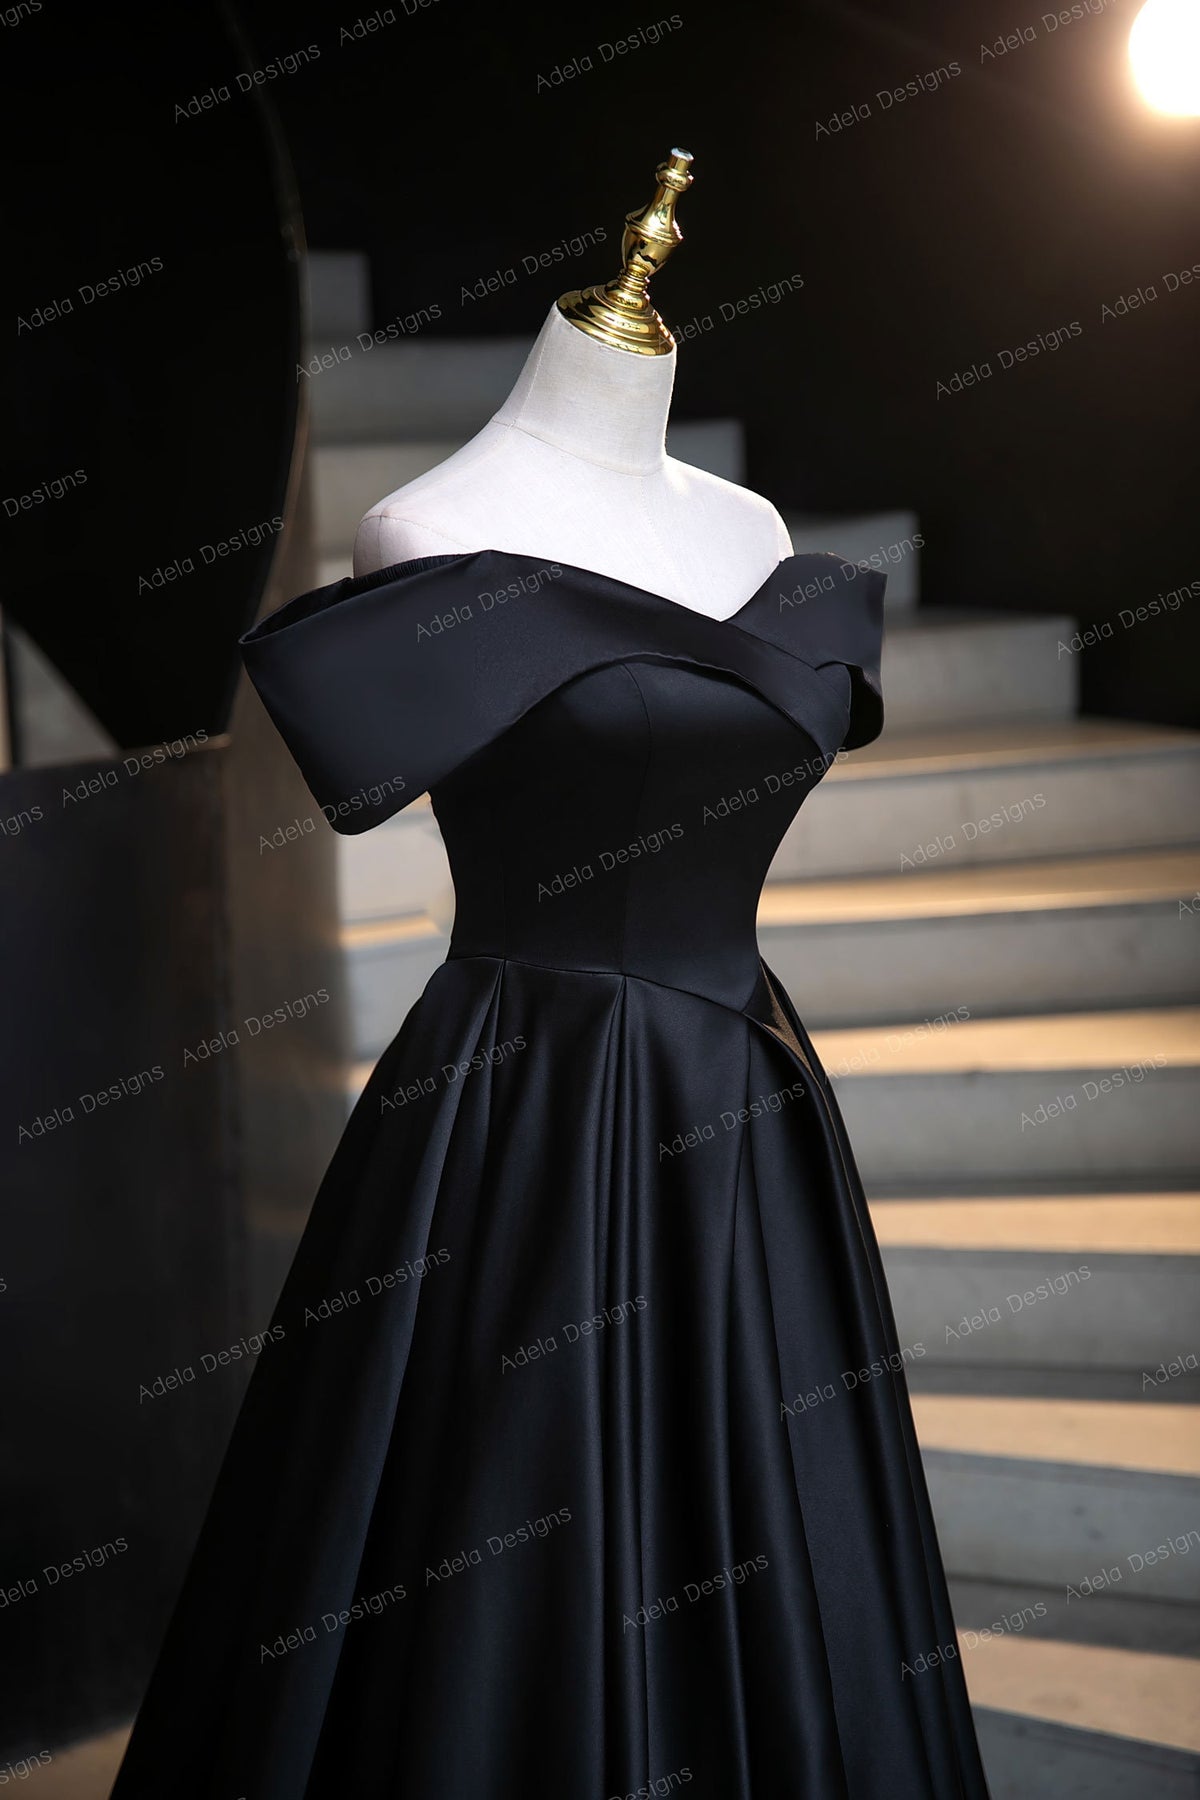 Classic Design Gothic Black Satin Wedding Dress Bridal Gown Off the Shoulder Neckline Open Back Aline with Corset Back